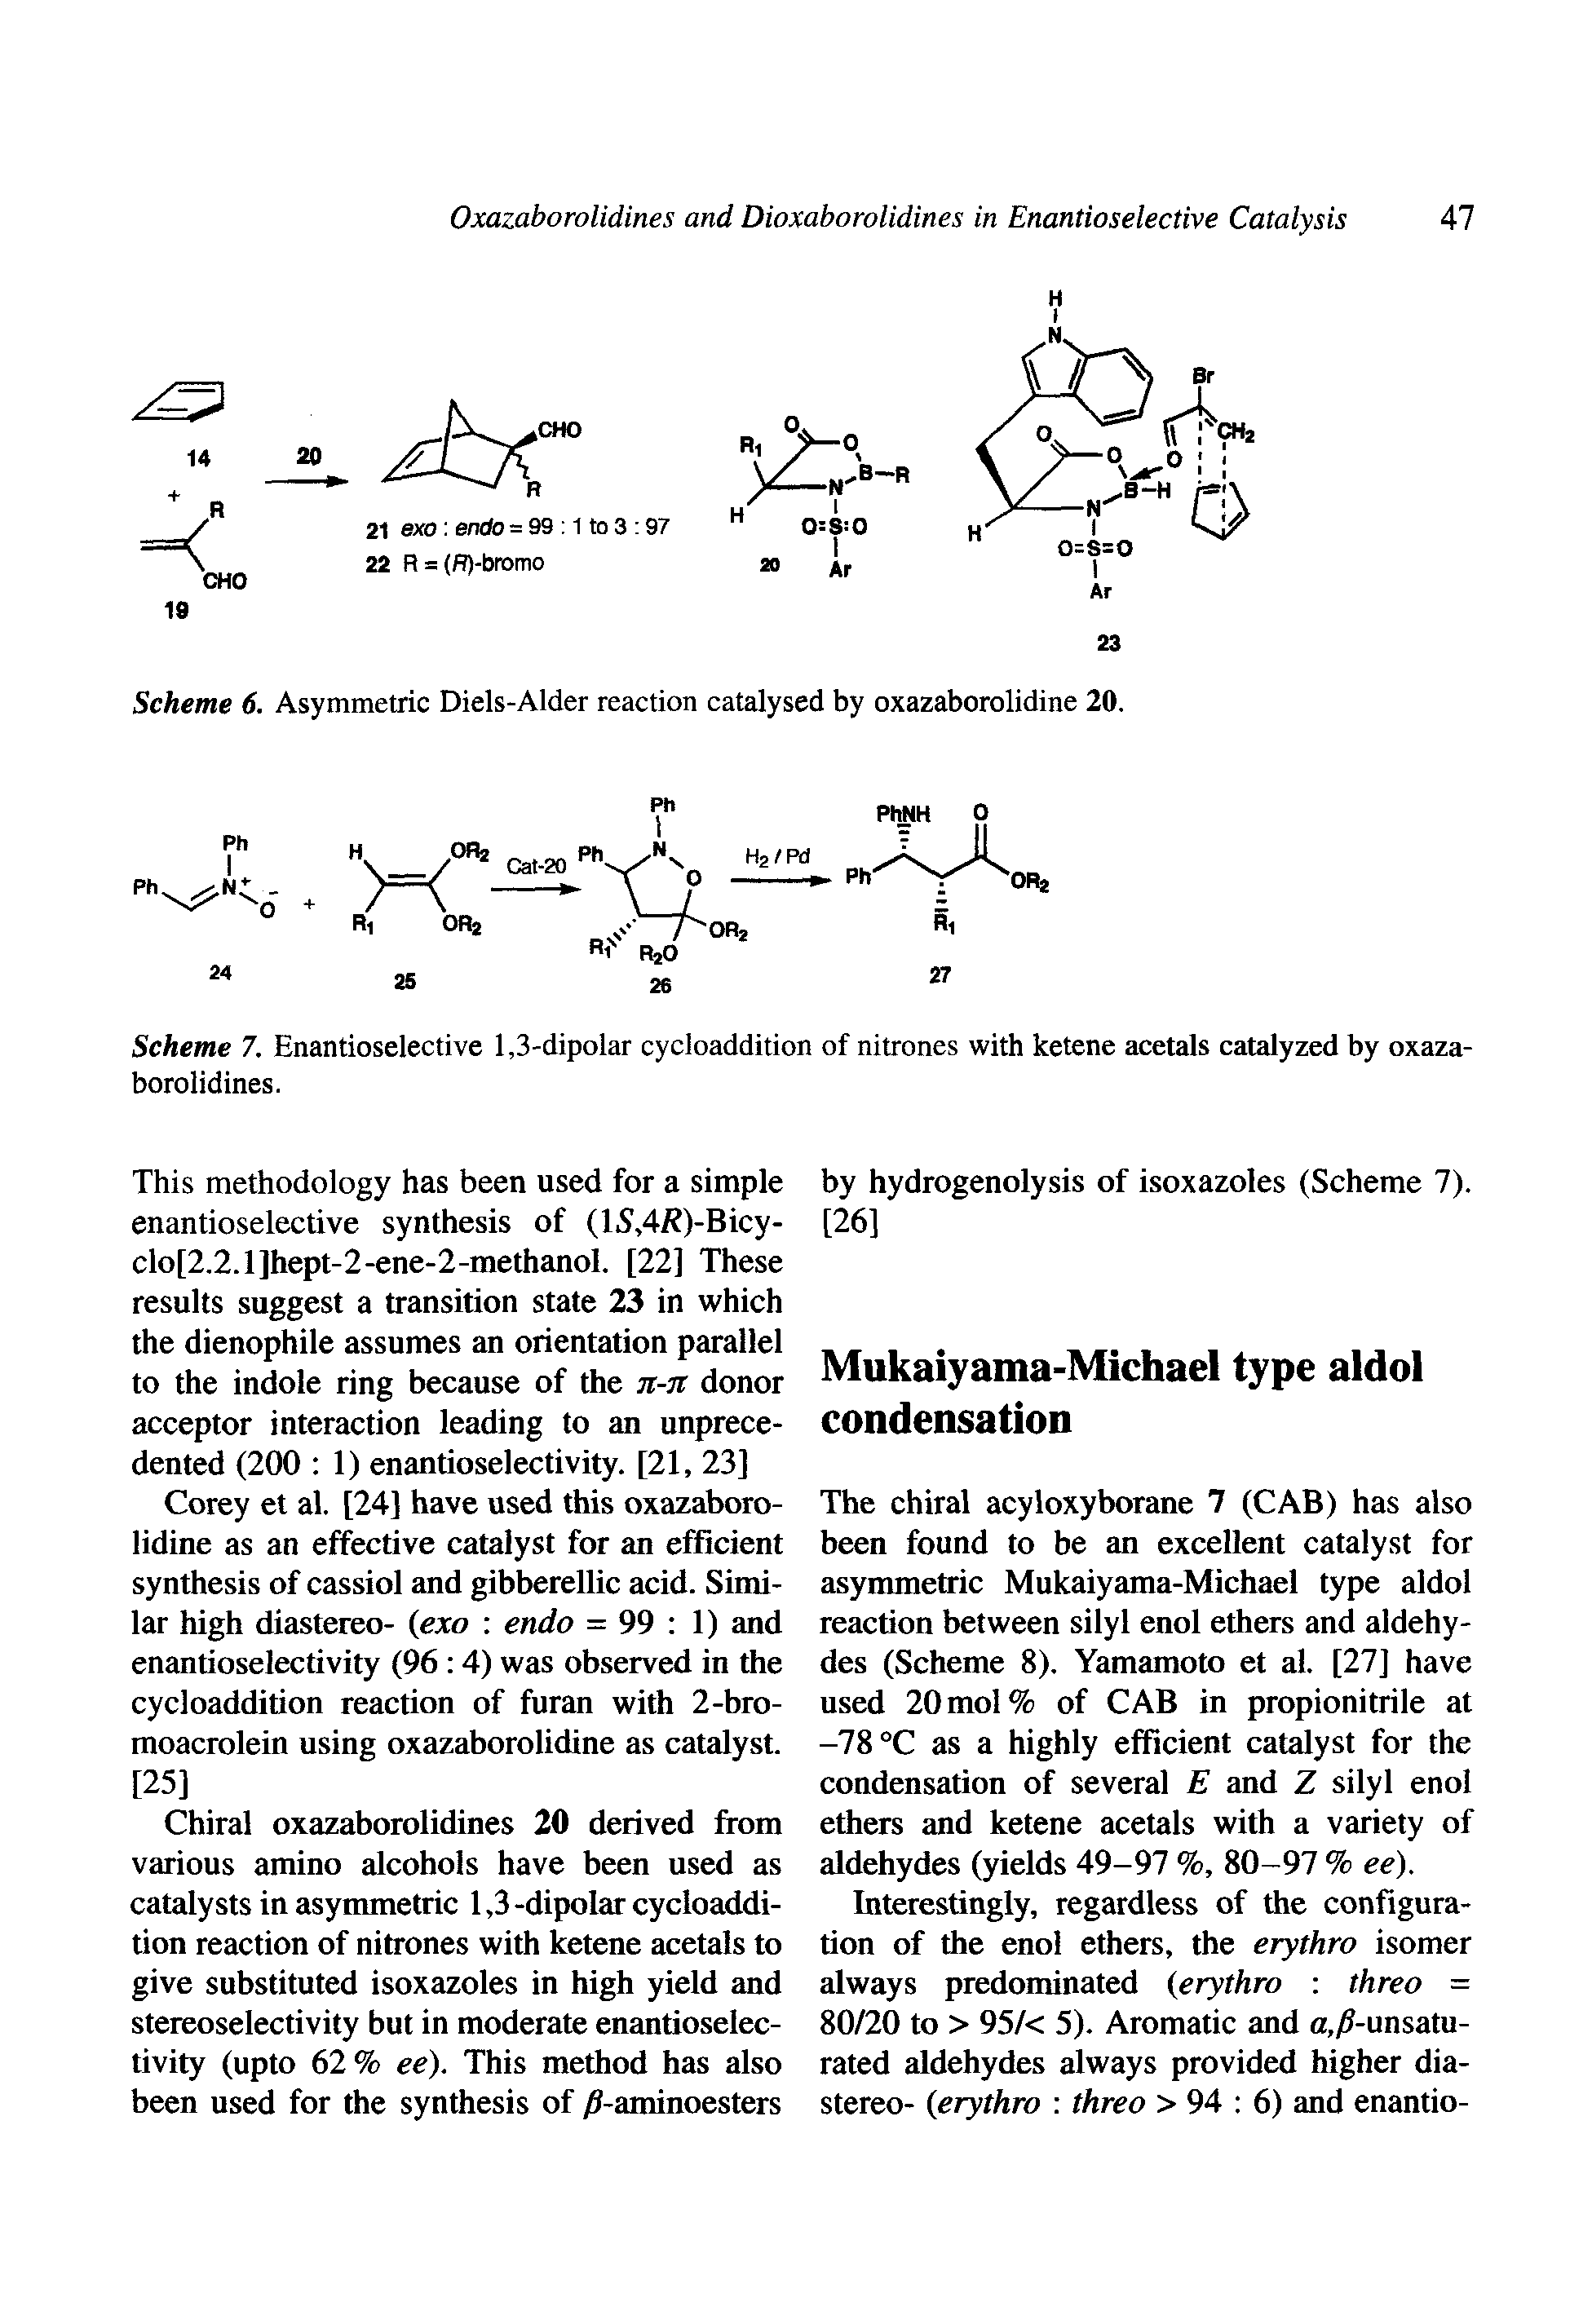 Scheme 7. Enantioselective 1,3-dipolar cycloaddition of nitrones with ketene acetals catalyzed by oxazaborolidines.